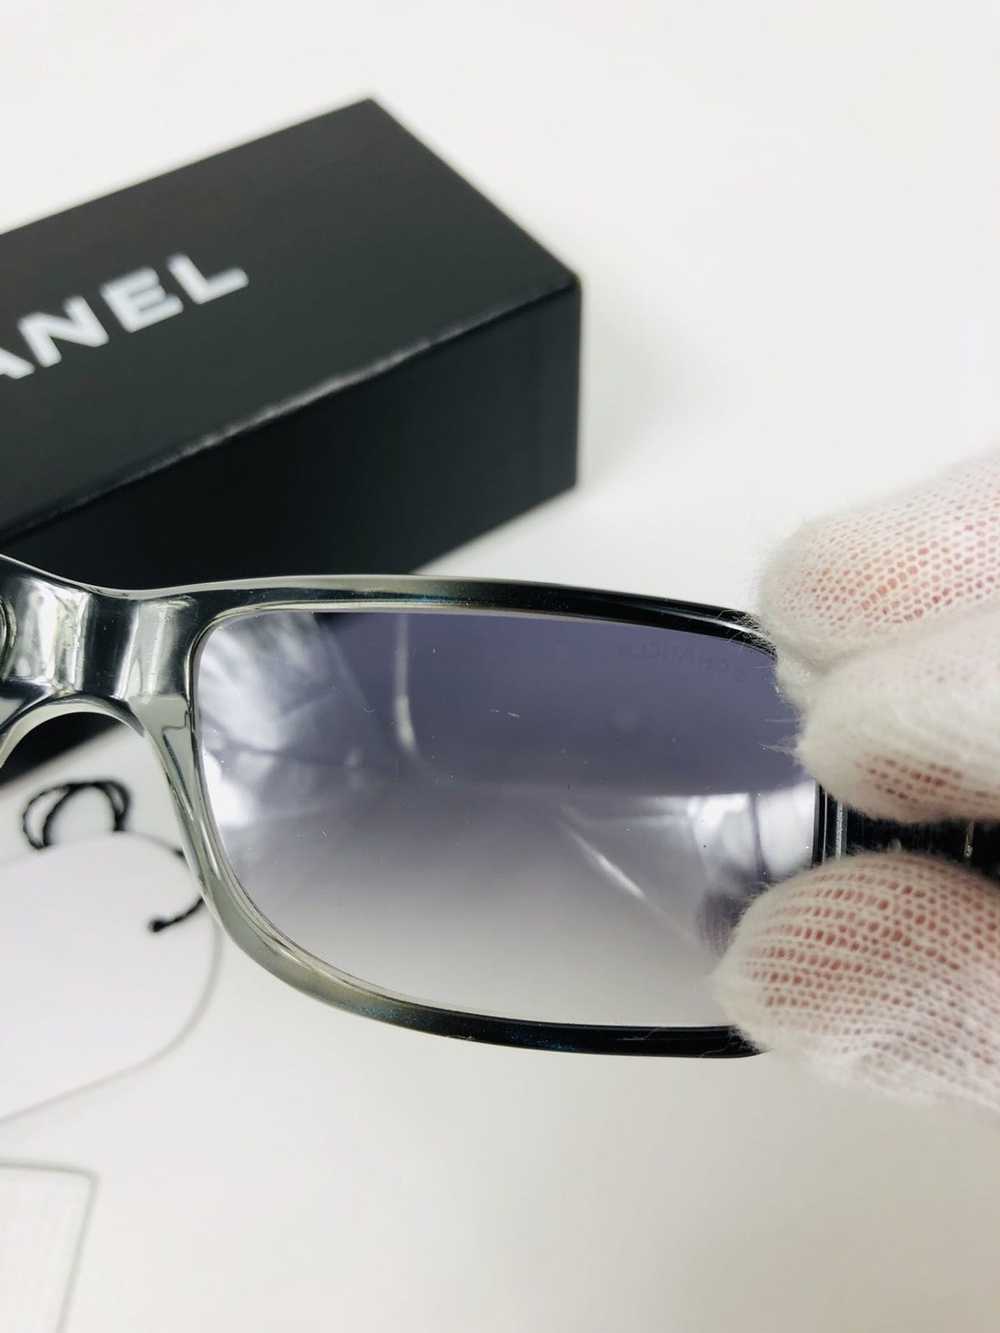 Chanel Chanel cc logo sunglasses - image 8